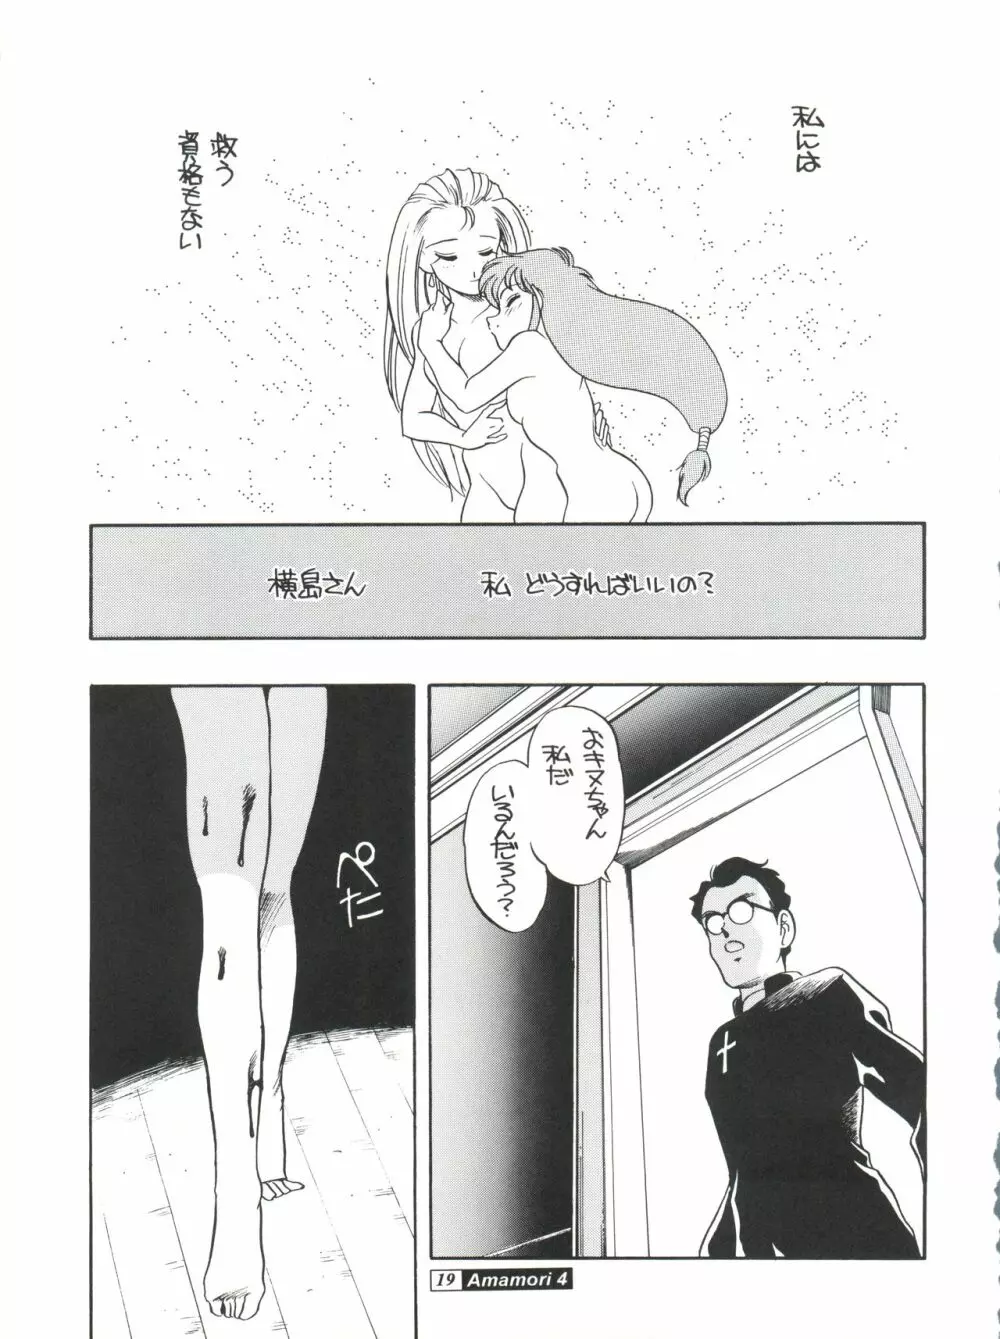 Amamori 4 - page19